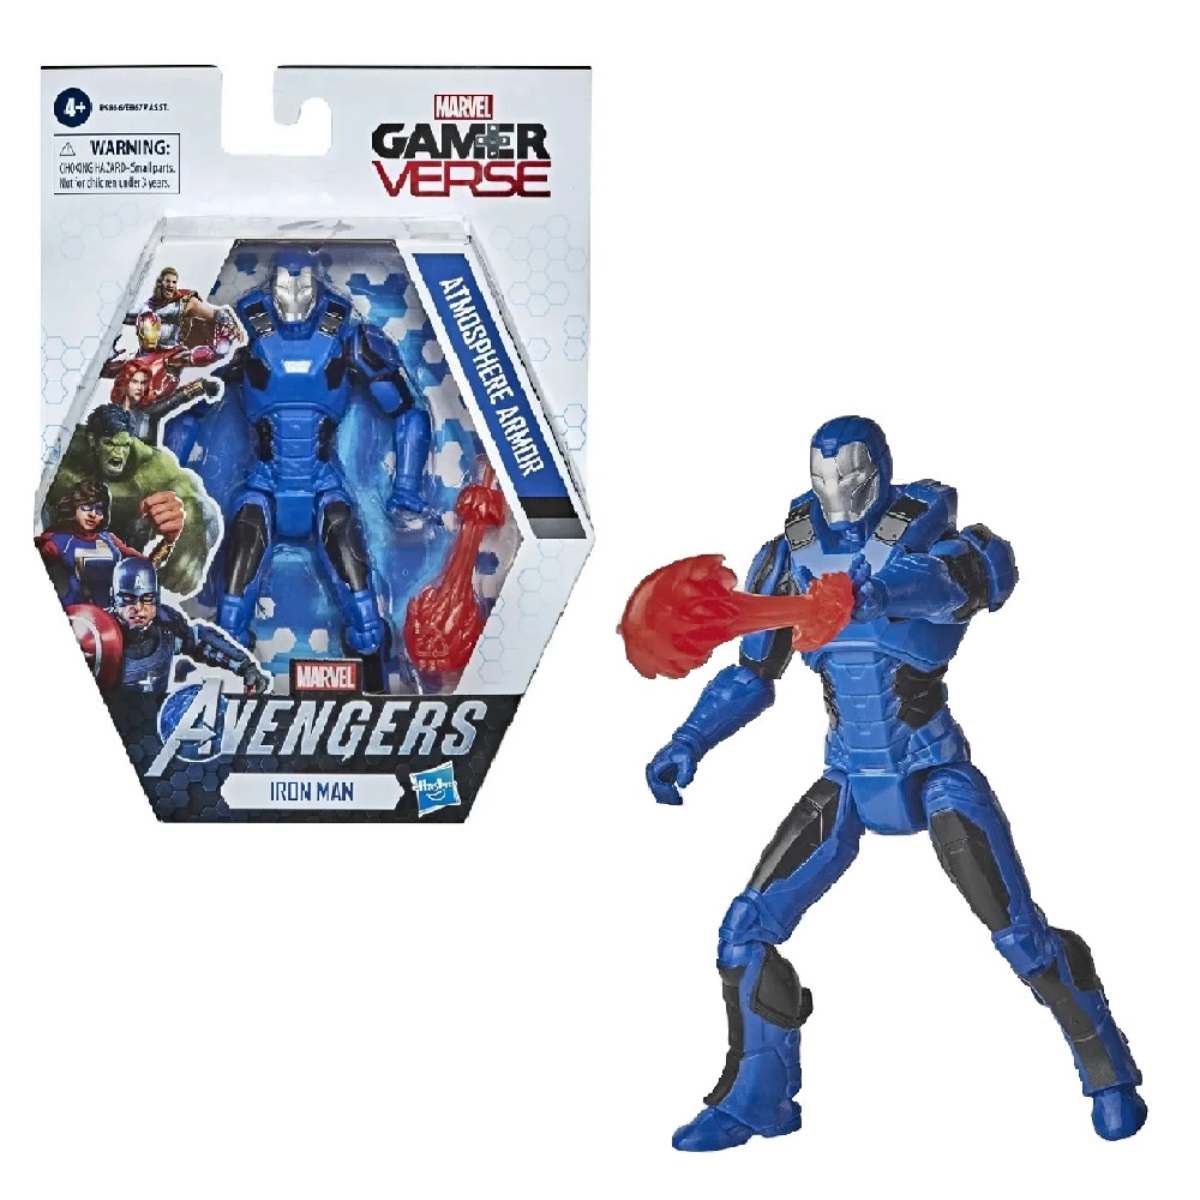 Boneco Avengers Gamer Verse | Homem de Ferro